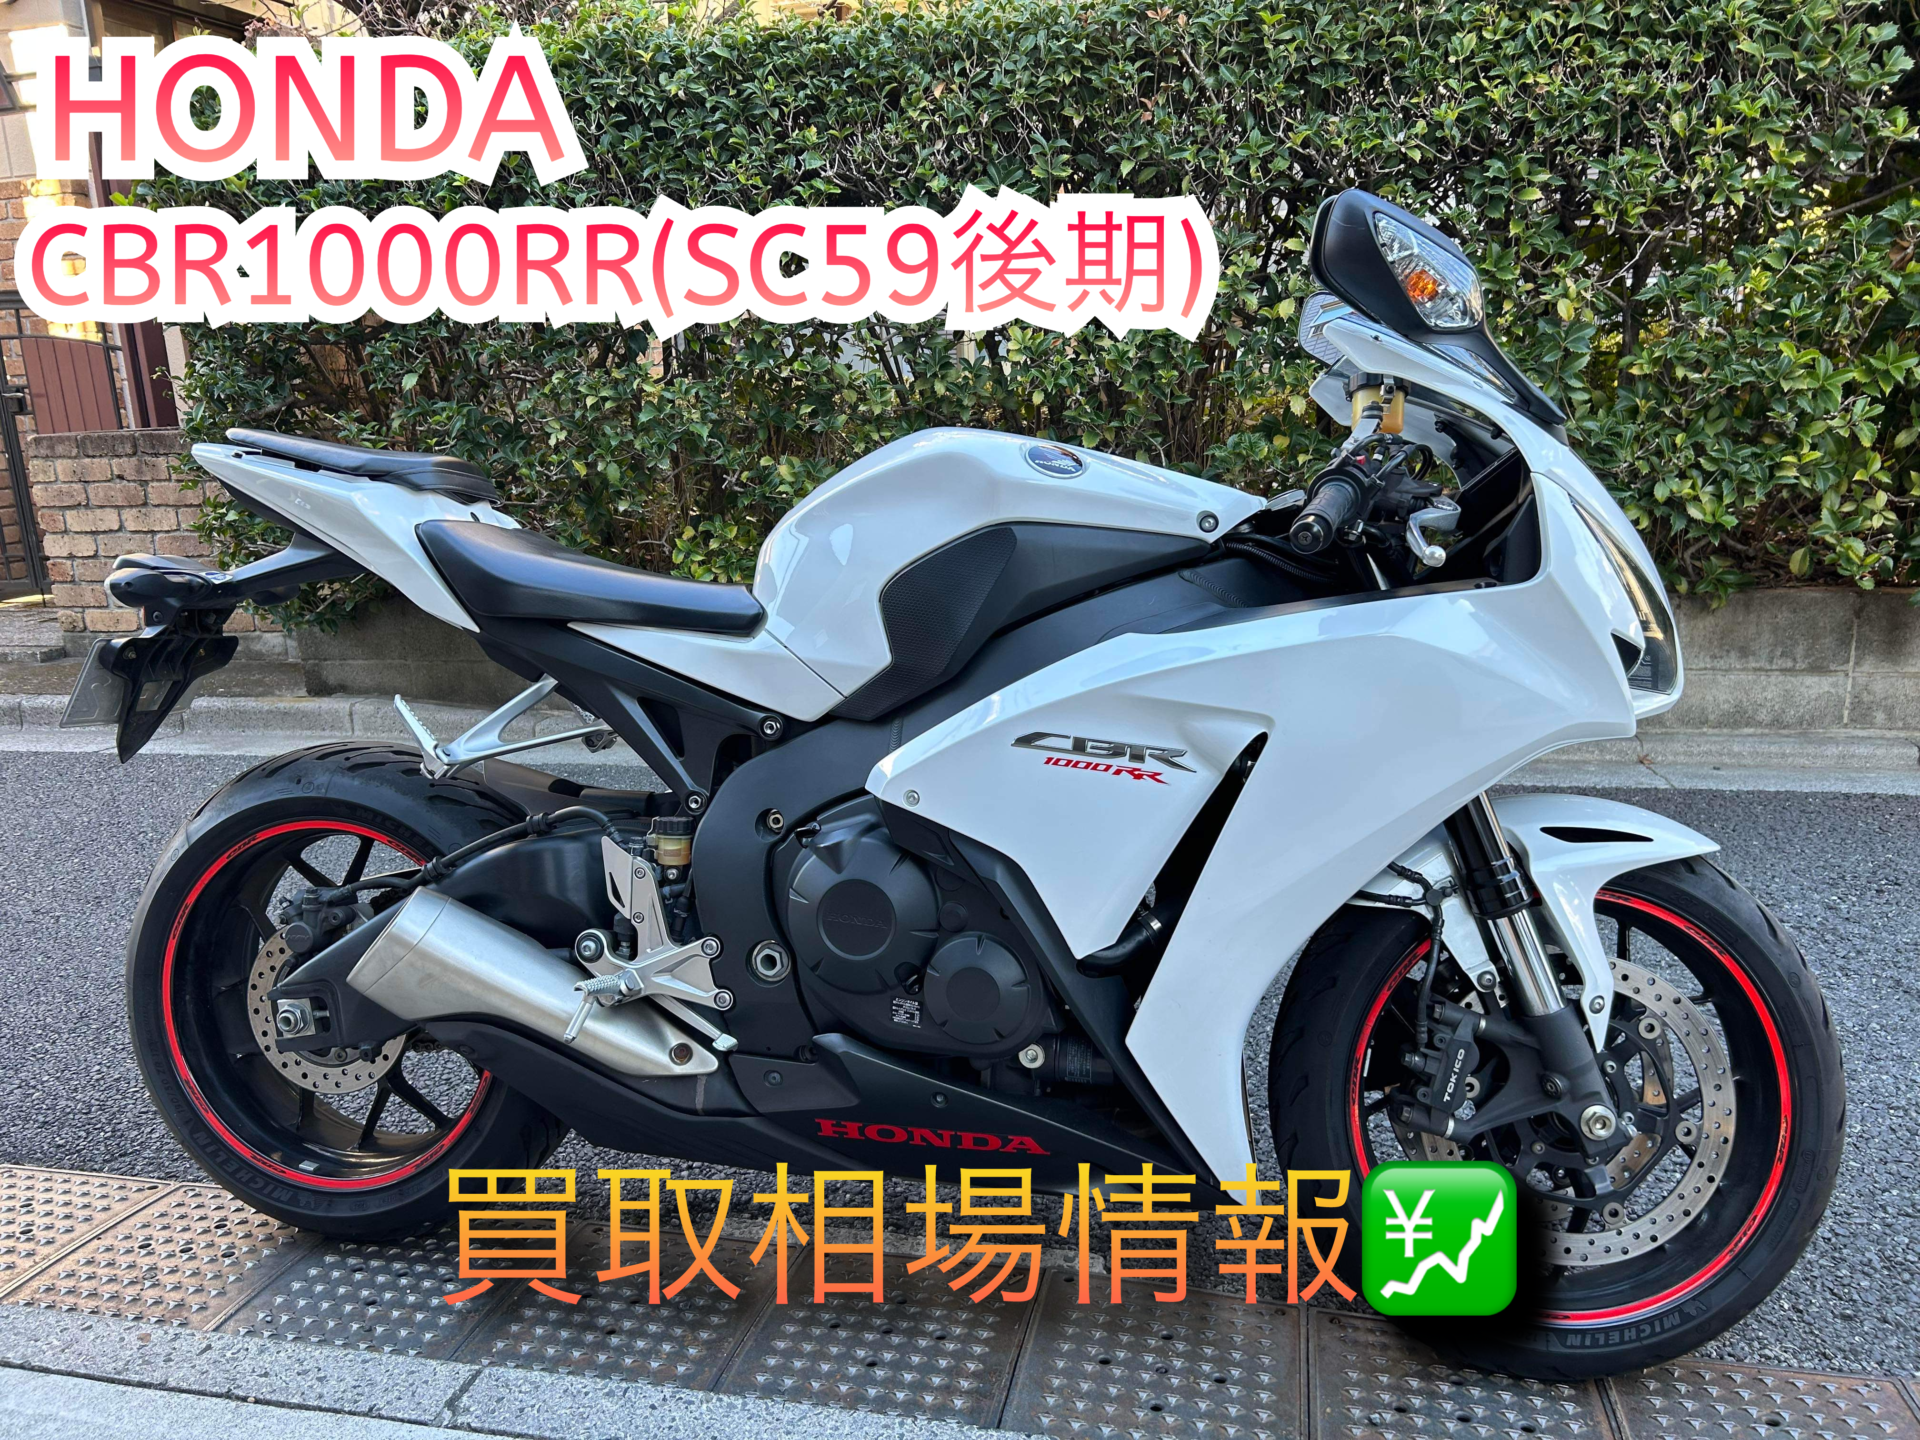 HONDA CBR1000RR(SC59後期) 買取相場情報 - バイク買取ならバイク査定 